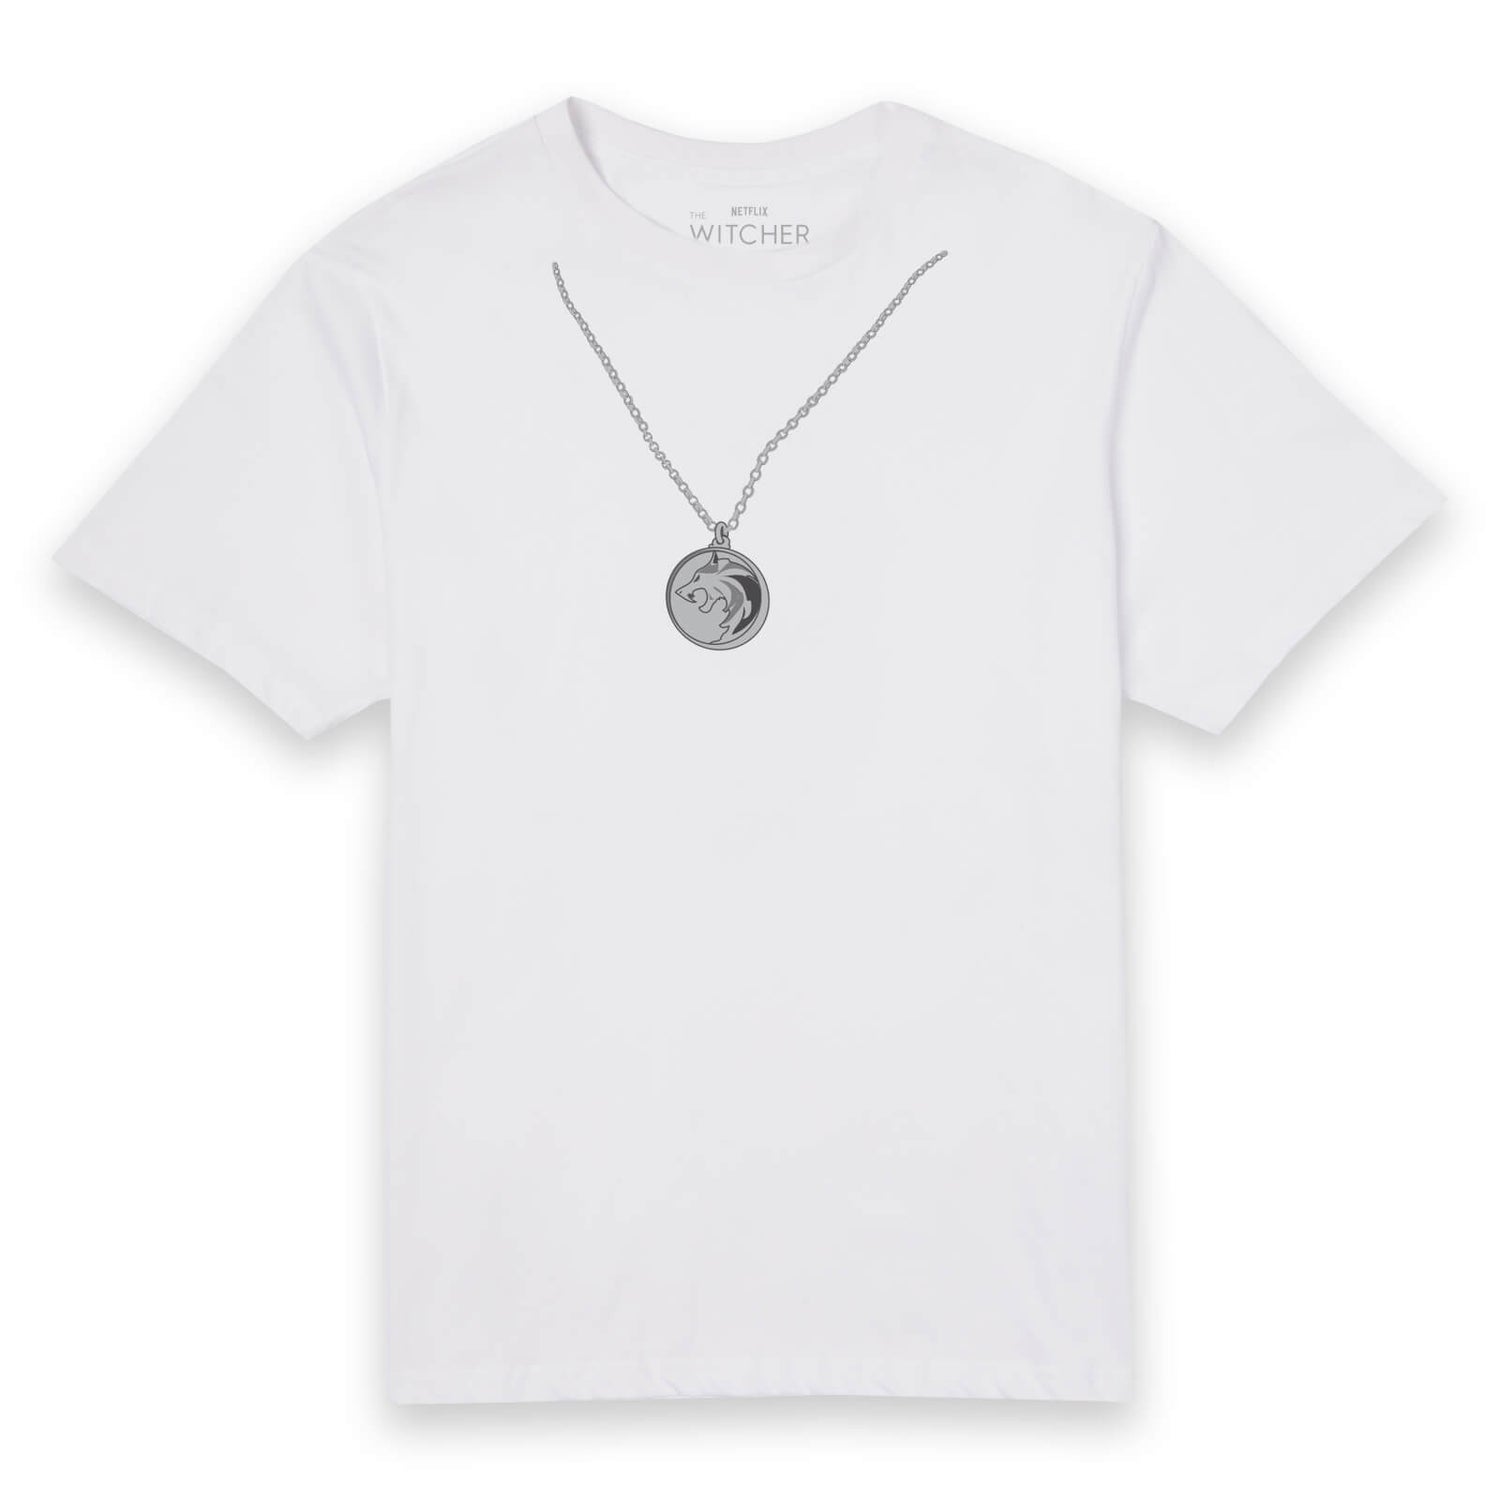 Camiseta unisex The Witcher Necklace - Blanco